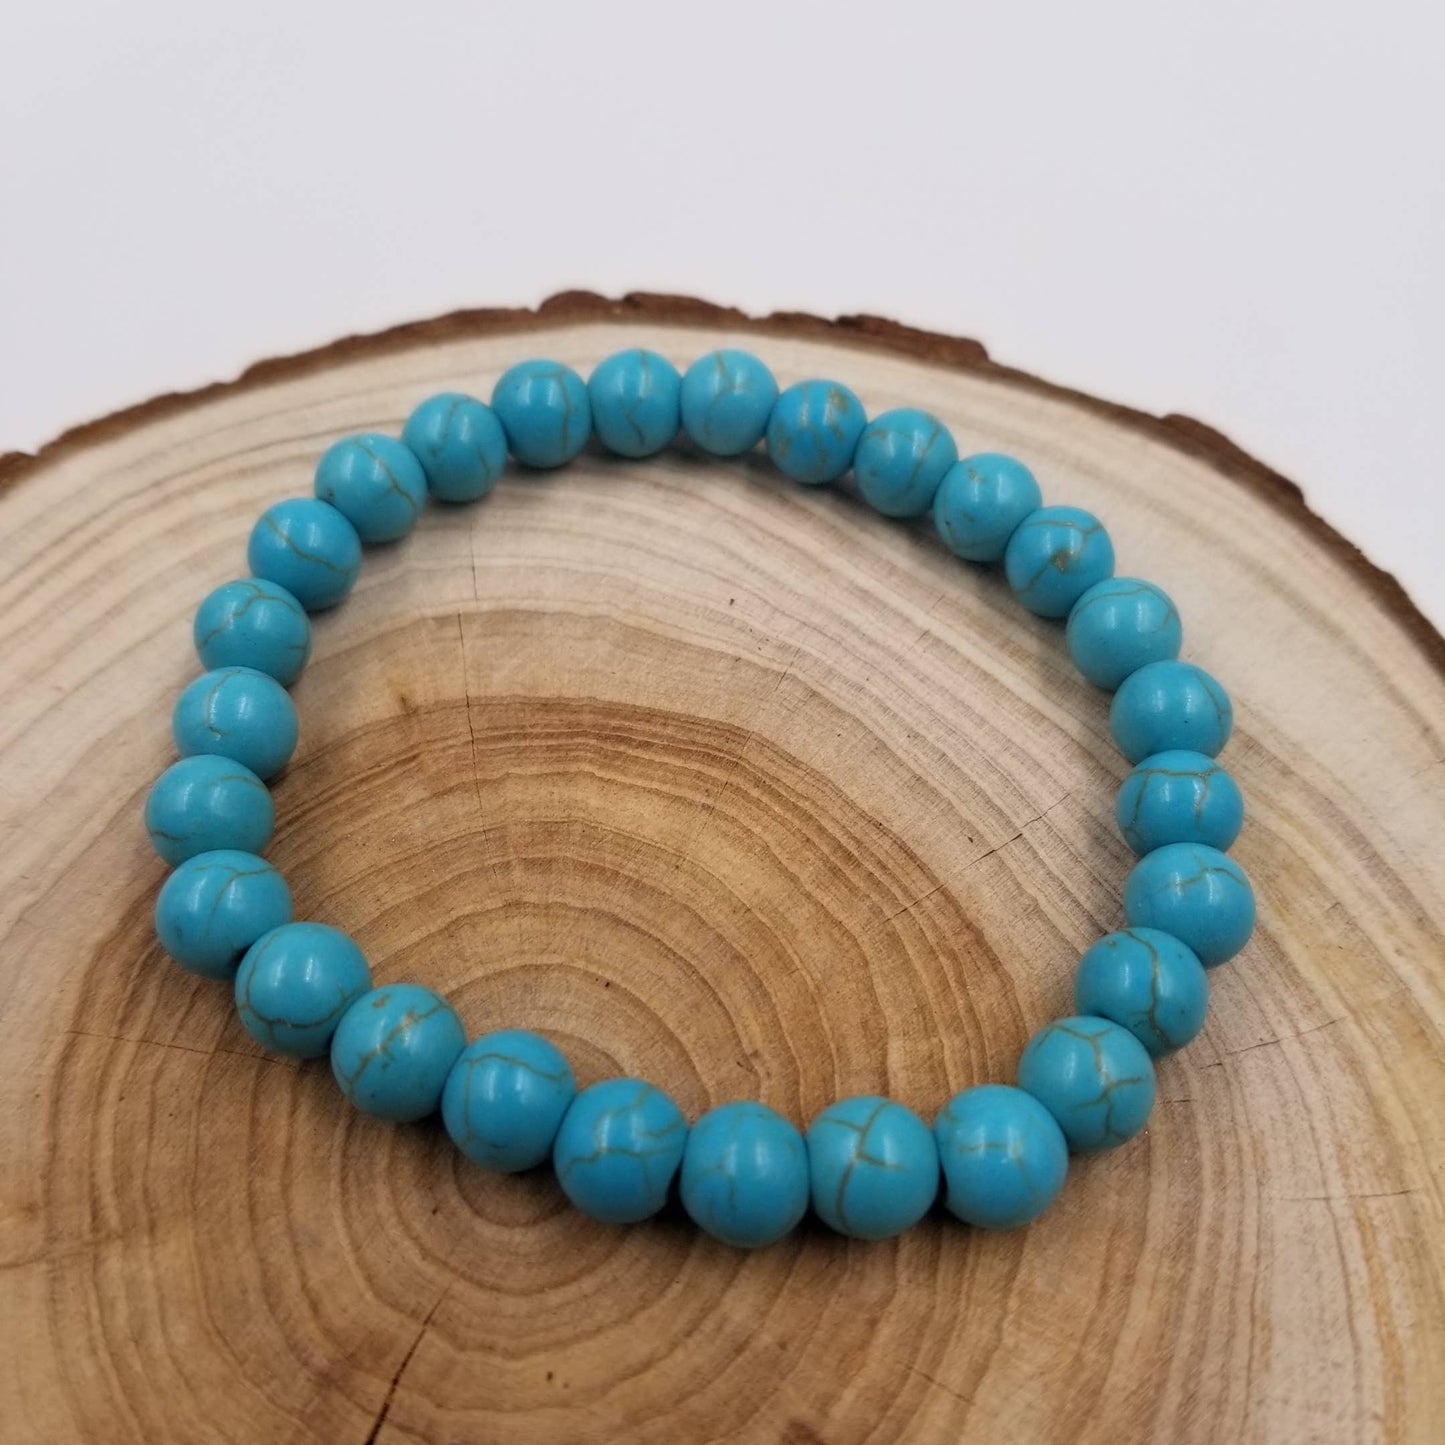 CHAKRA JEWELRY - 8MM Energy Natural Stone Beads Yoga Bracelet: Blue Stripe